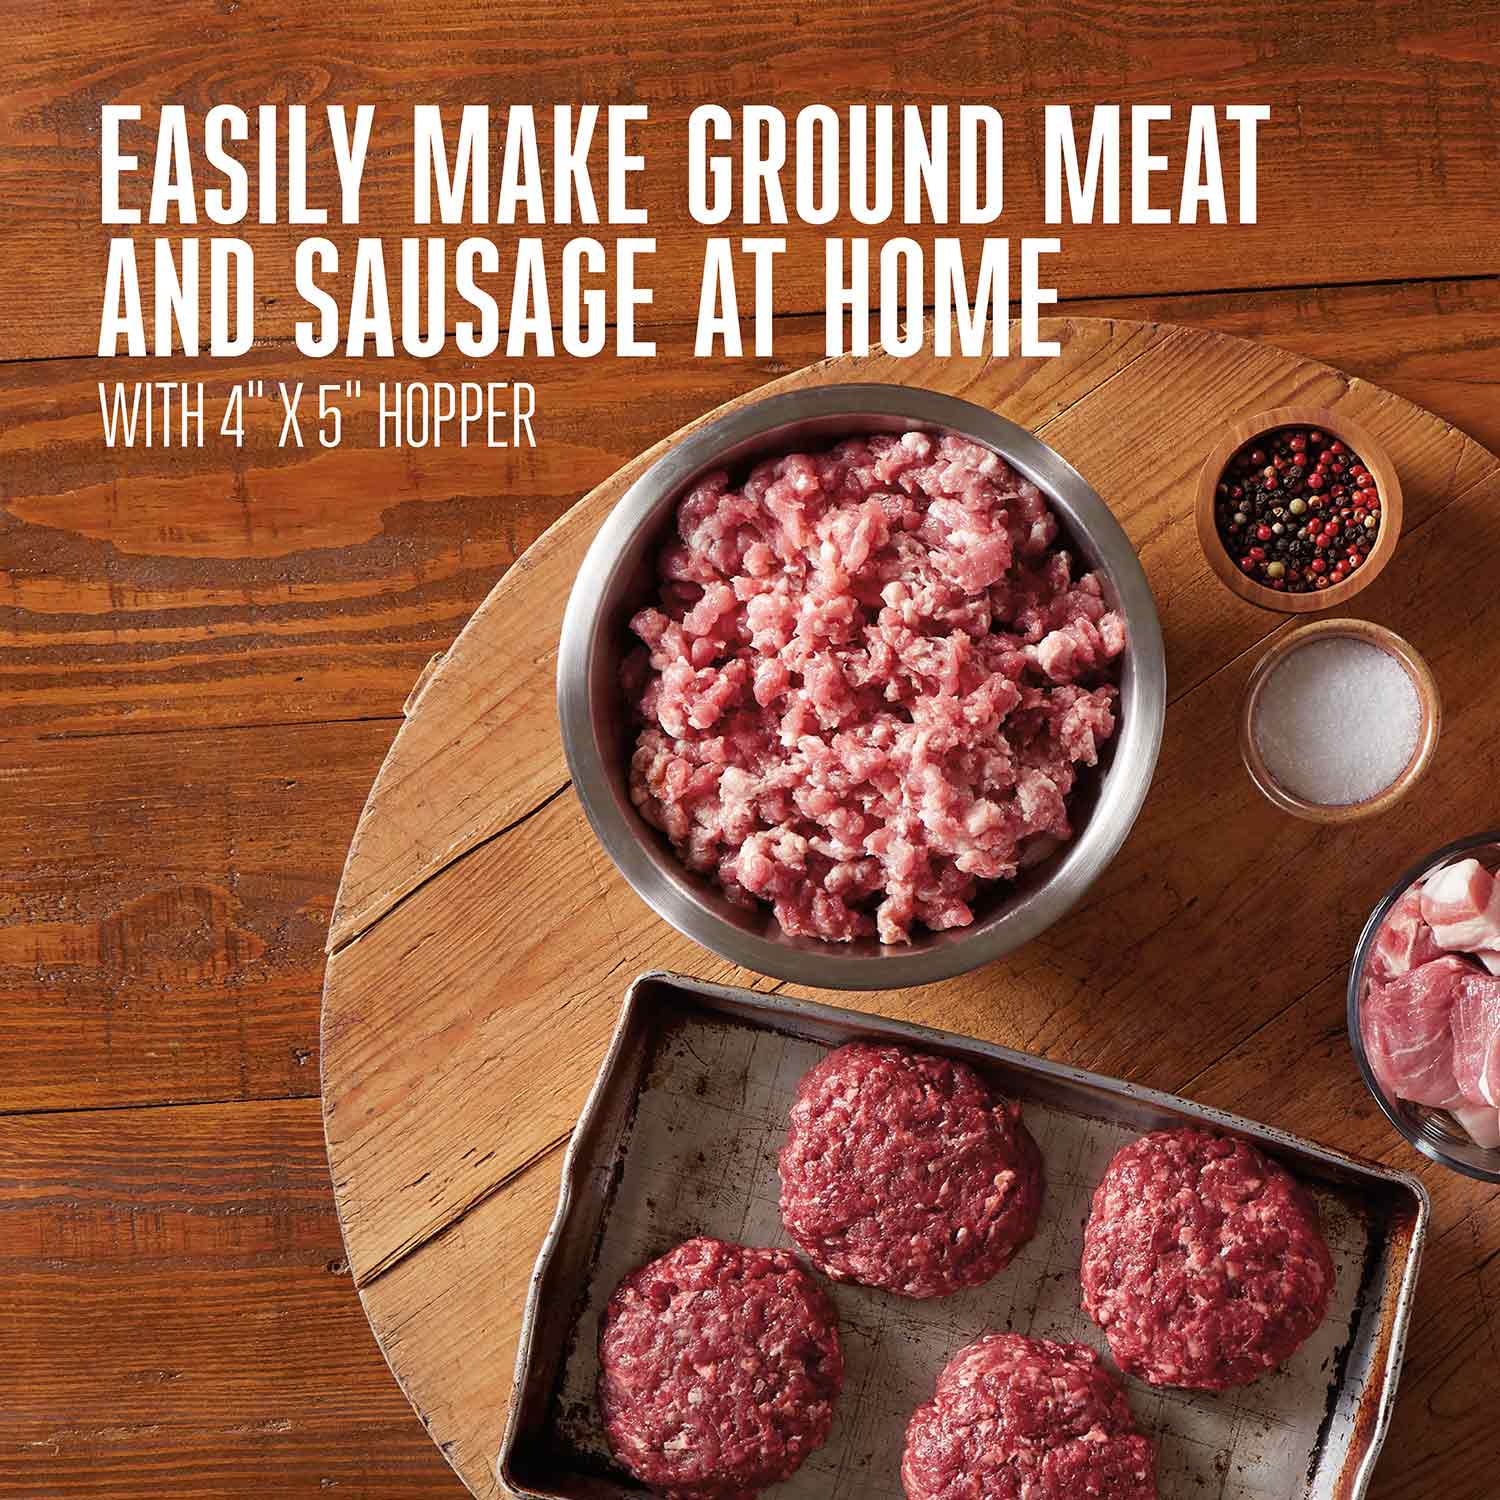 Weston® #22 Manual Meat Grinder - 36-2201-W